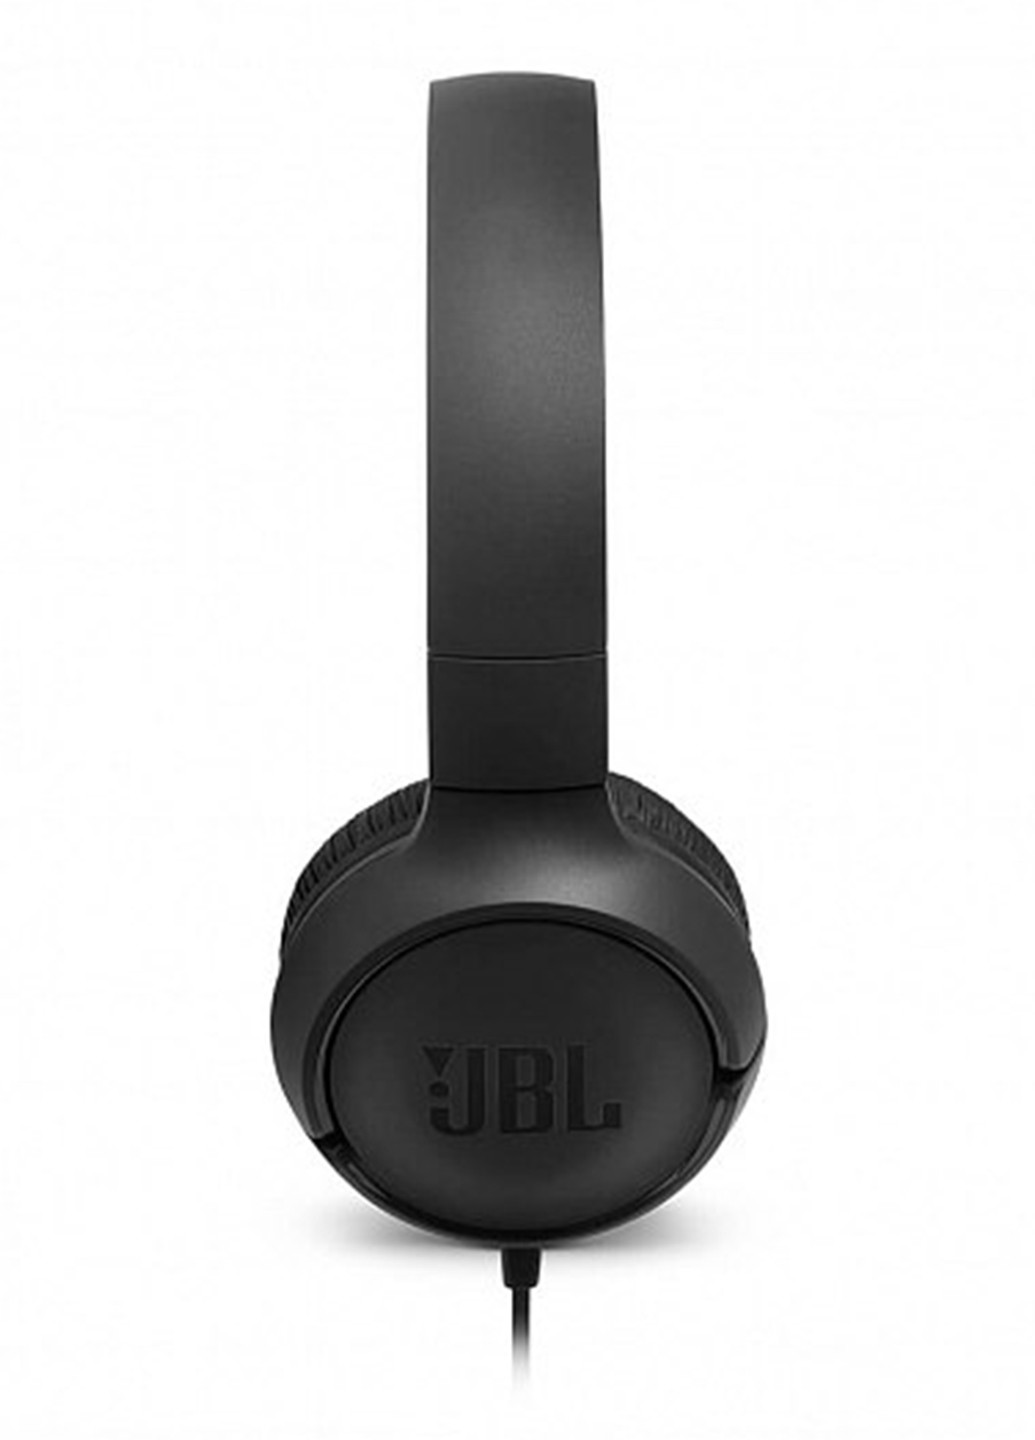 Наушники T500 Black (T500BLK) JBL jblt500 (131629266)